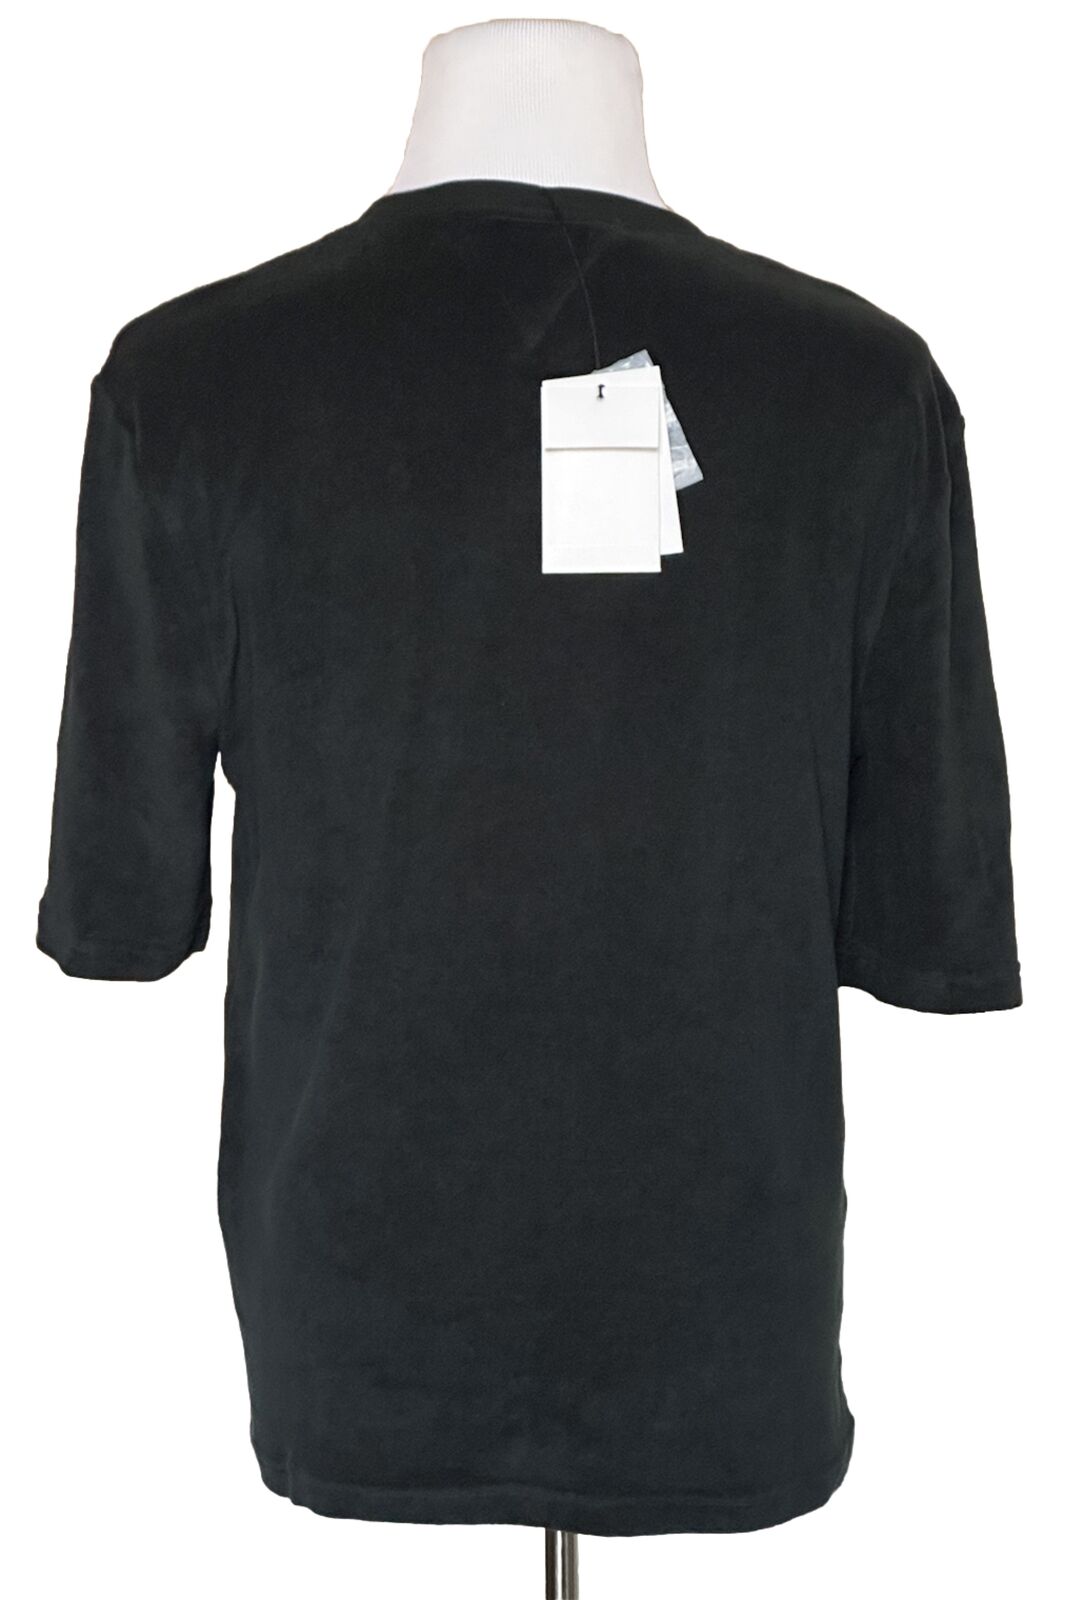 NWT $550 Bottega Veneta Men’s Toweling Jersey T-shirt Green XL Italy 656849